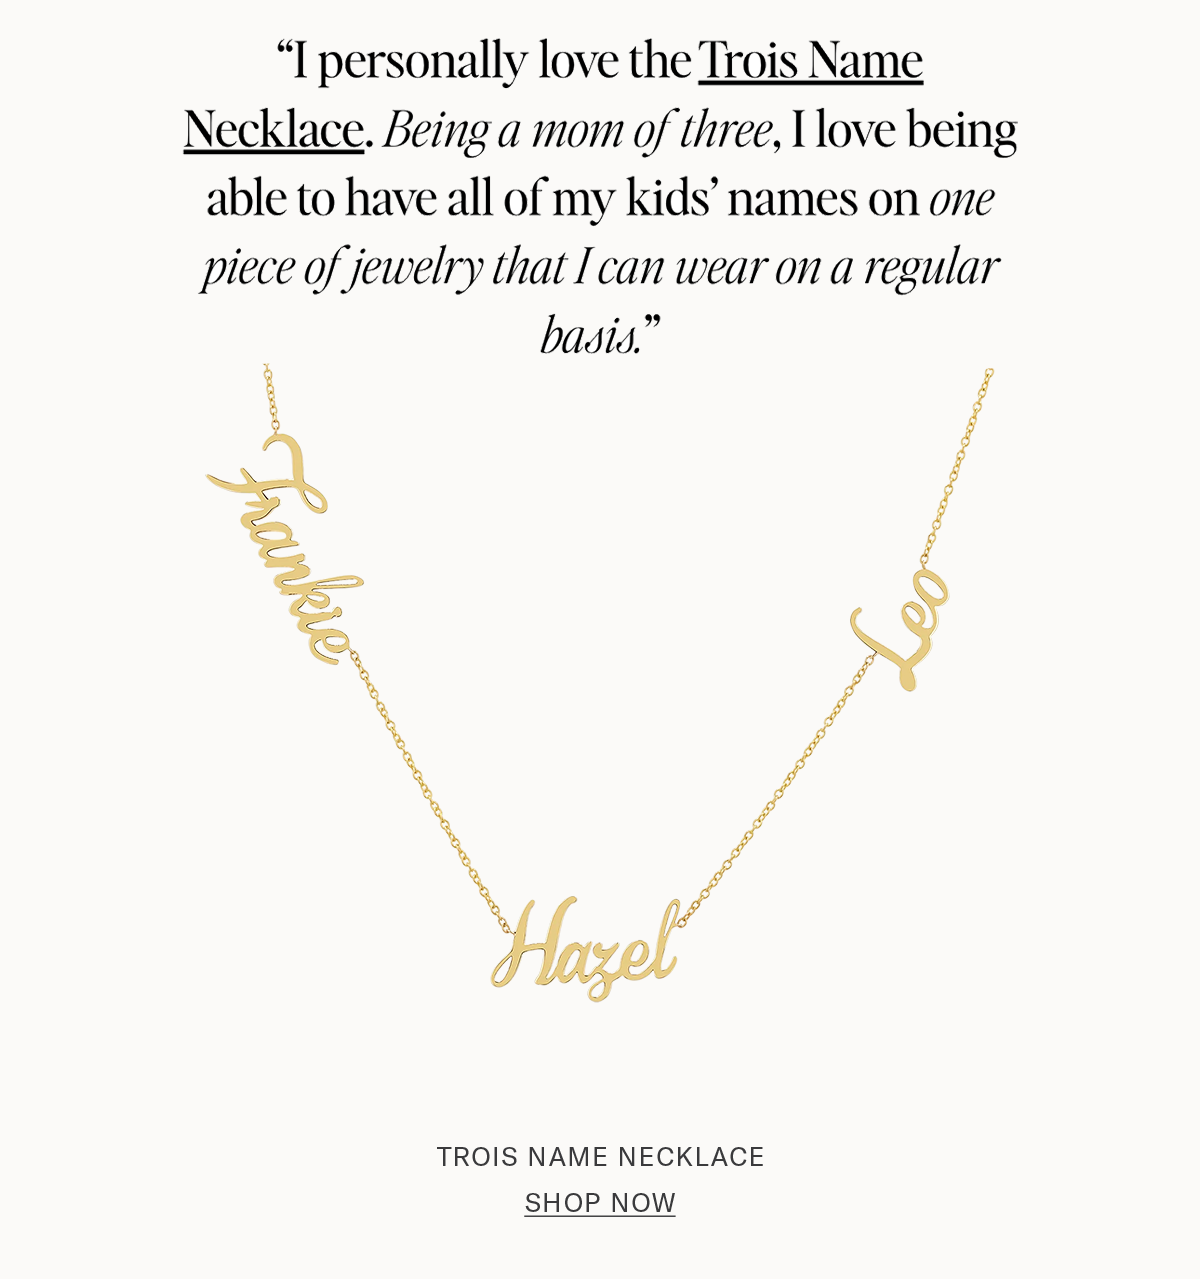 Trois Name Necklace